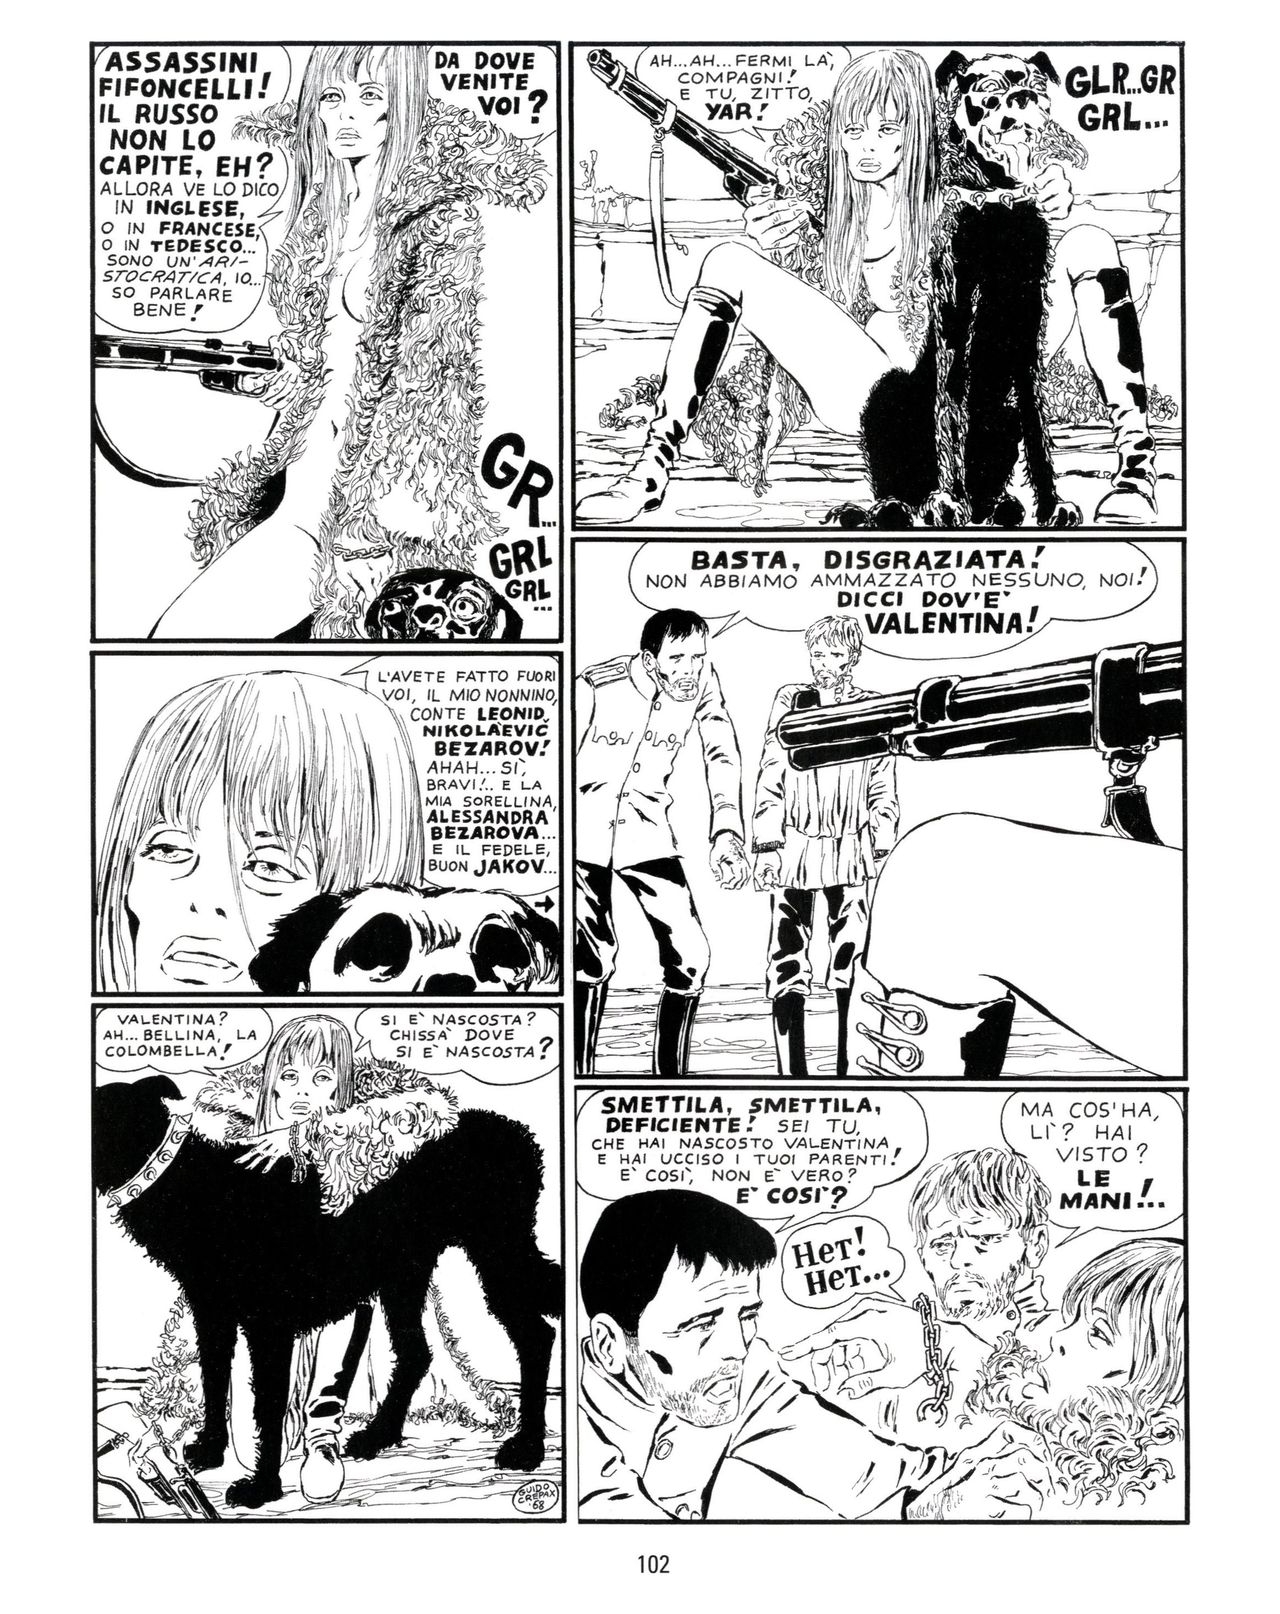 [Guido Crepax] Erotica Fumetti #25 : L'ascesa dei sotterranei : I cavalieri ciechi [Italian] 103